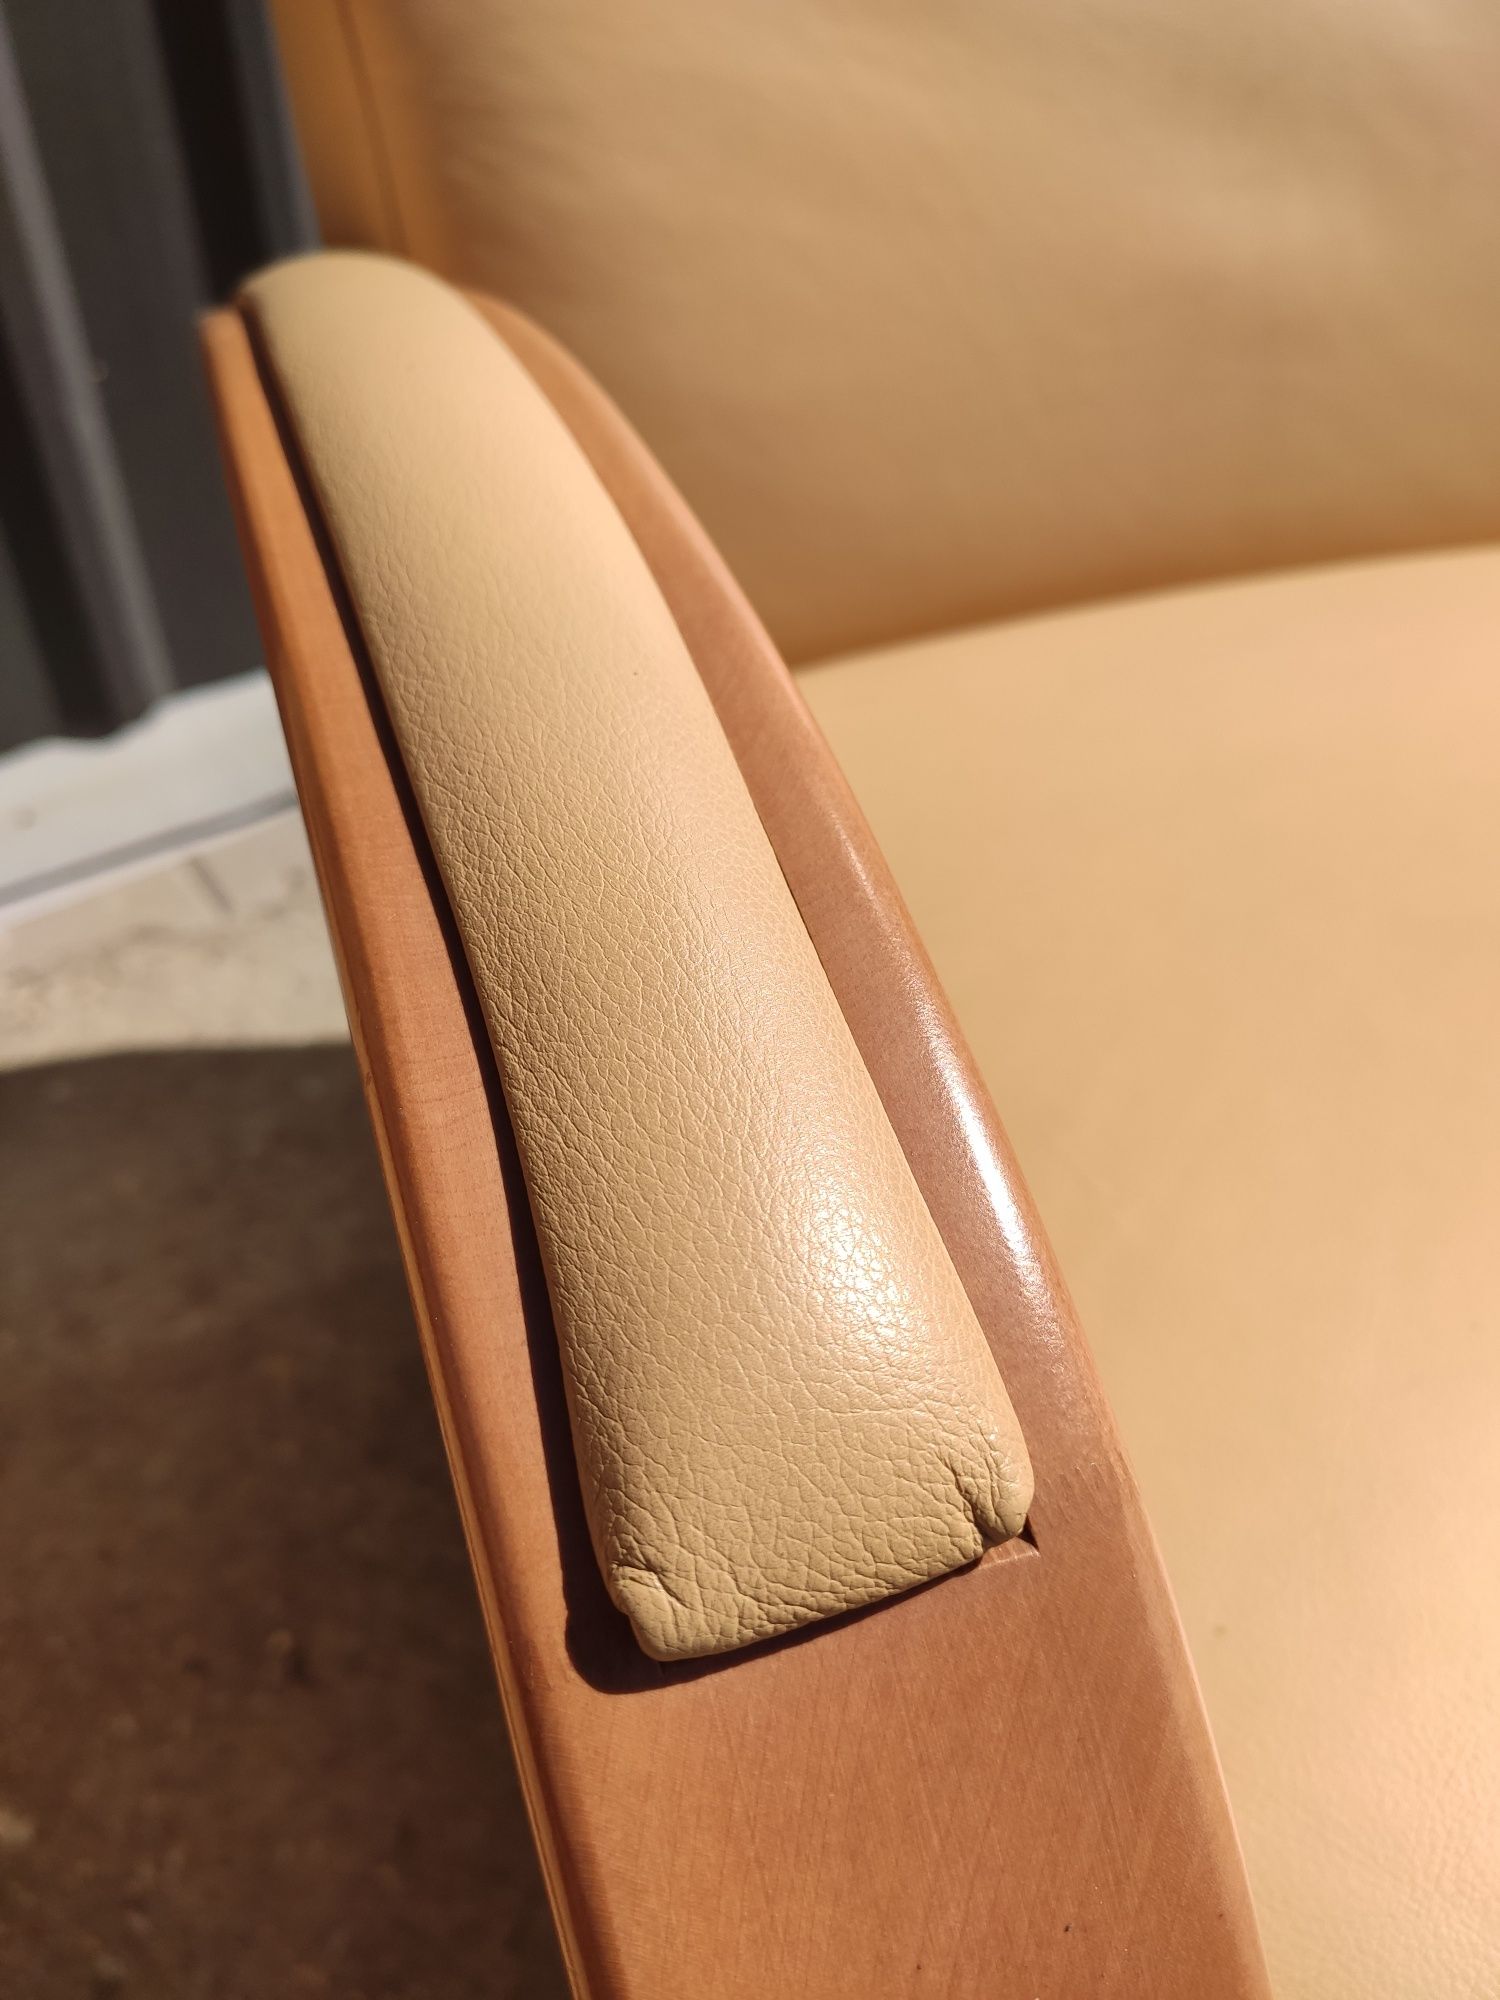 Sofa skórzana 3-osobowa+2 fotele- 100% skóra naturalna i drewno!Okazja